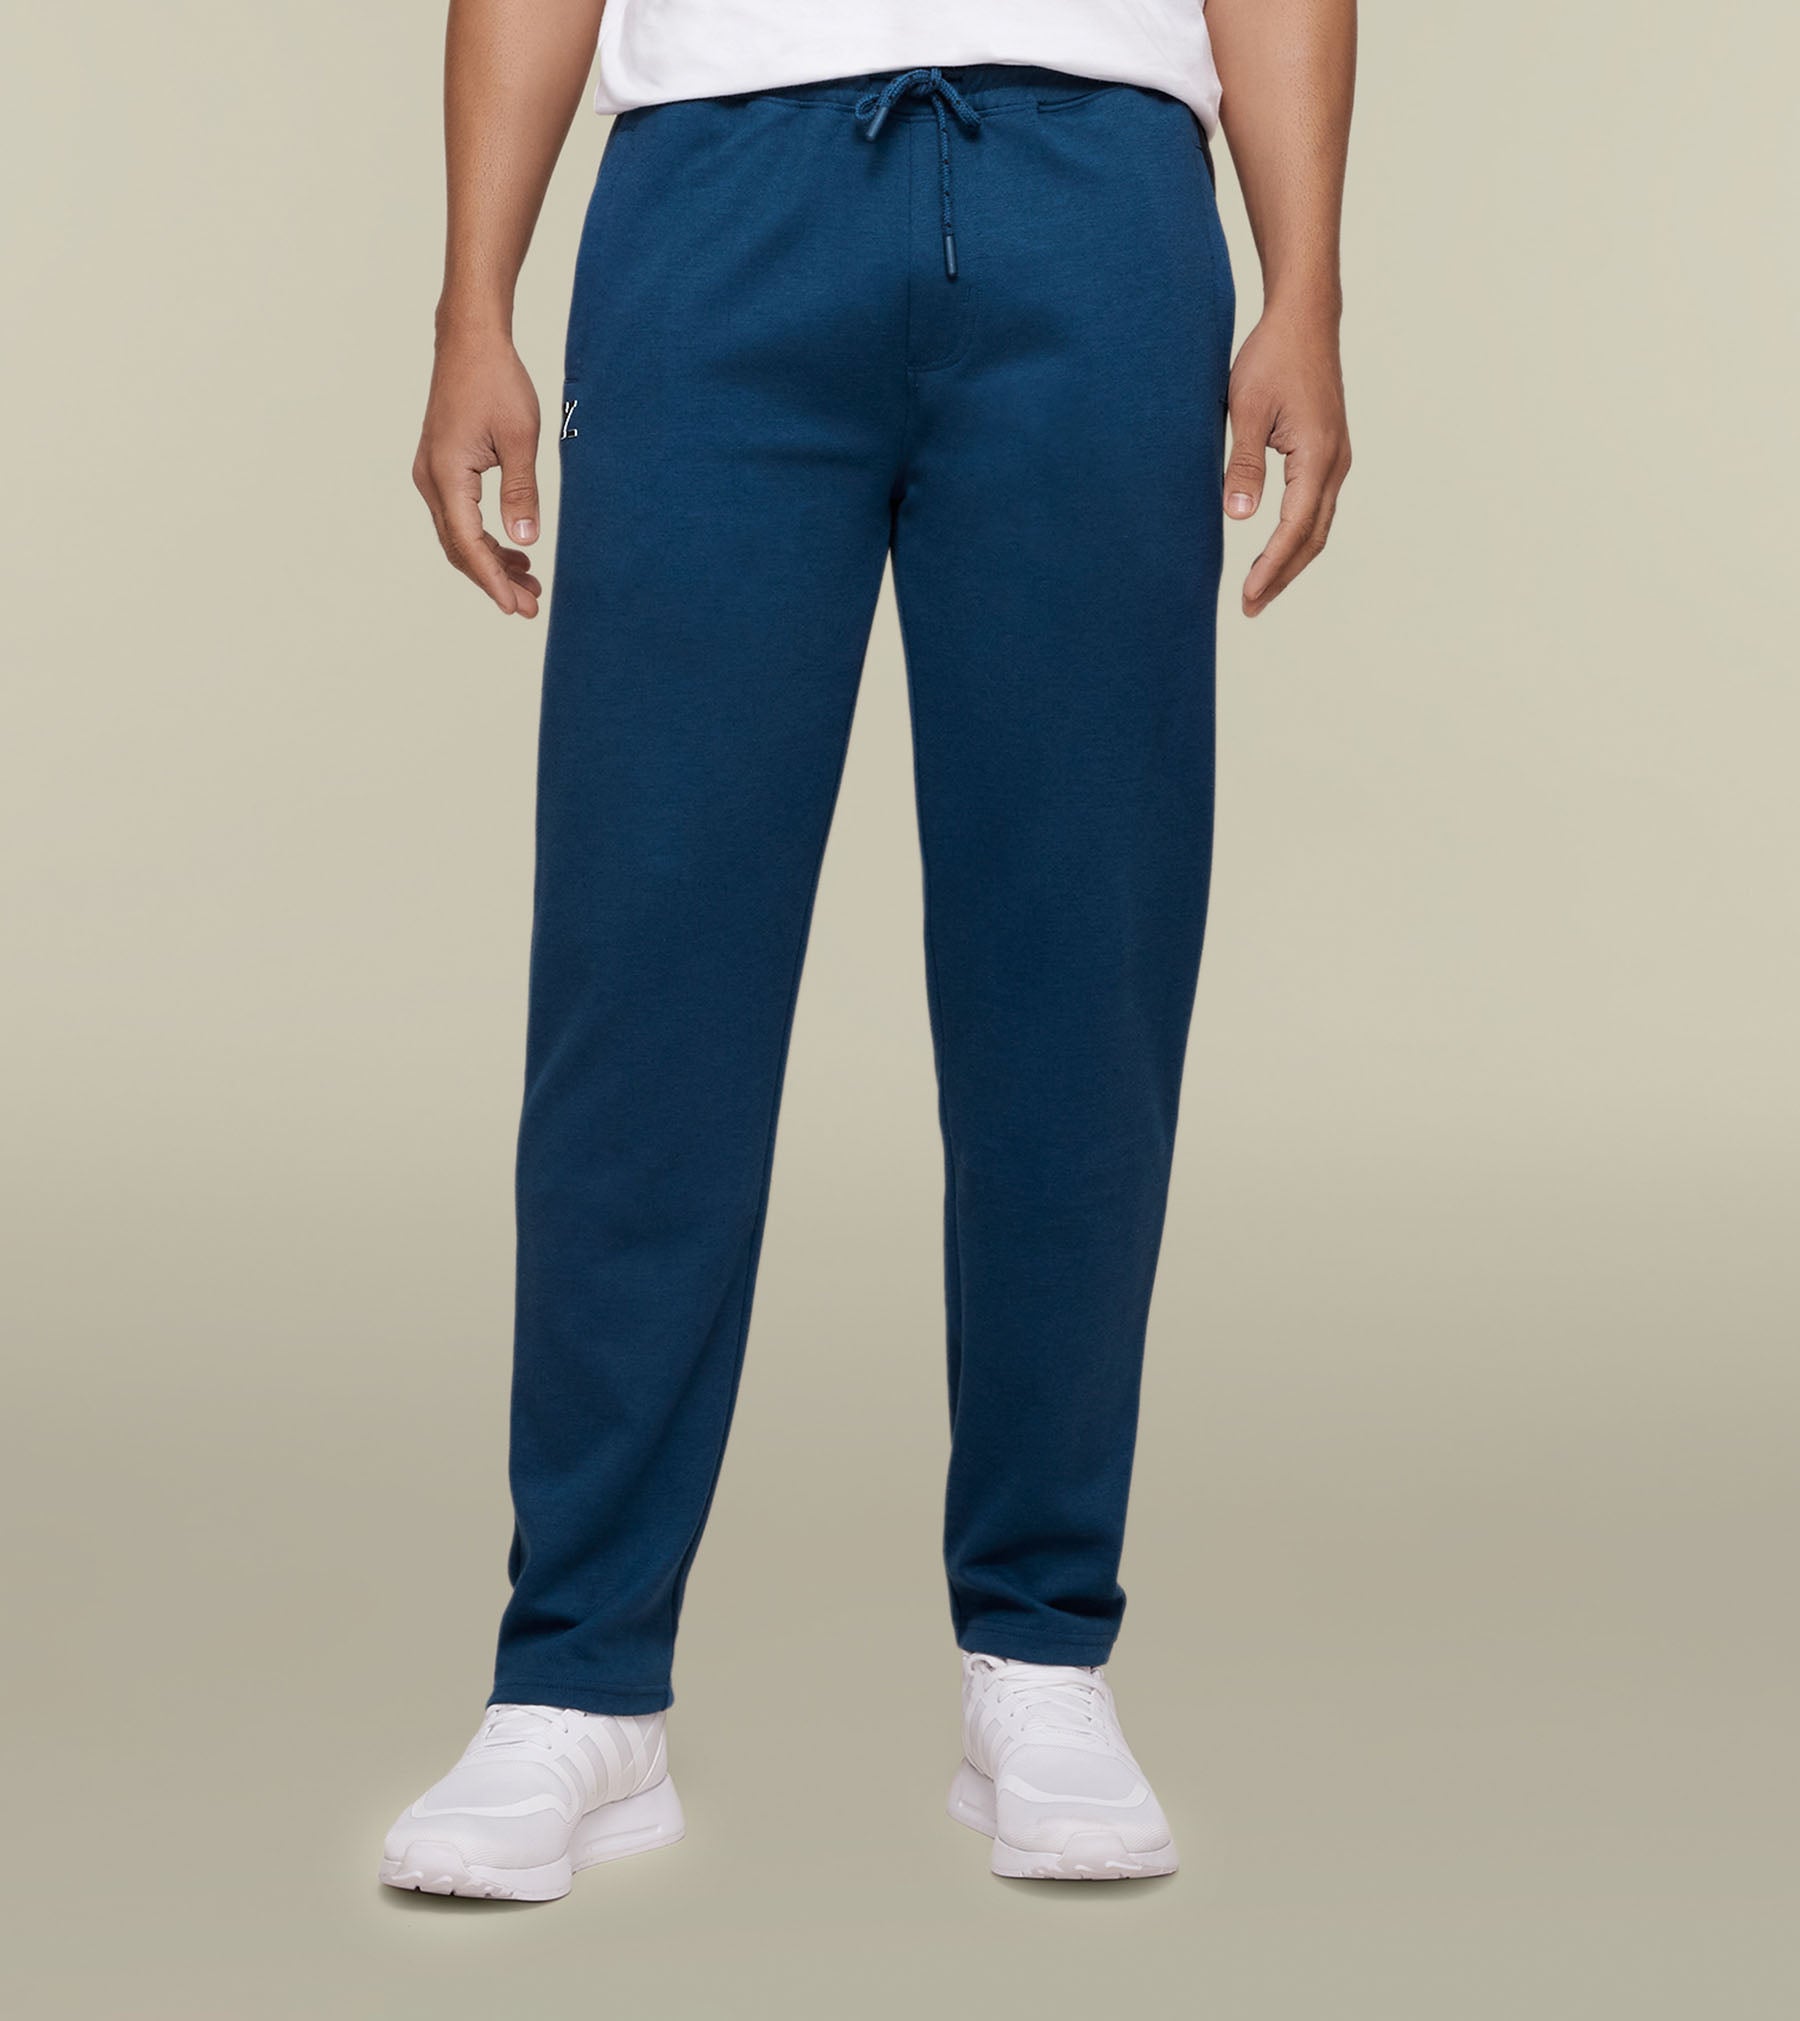 Code Cotton Rich Track Pants For Men Oxford Blue - XYXX Mens Apparels